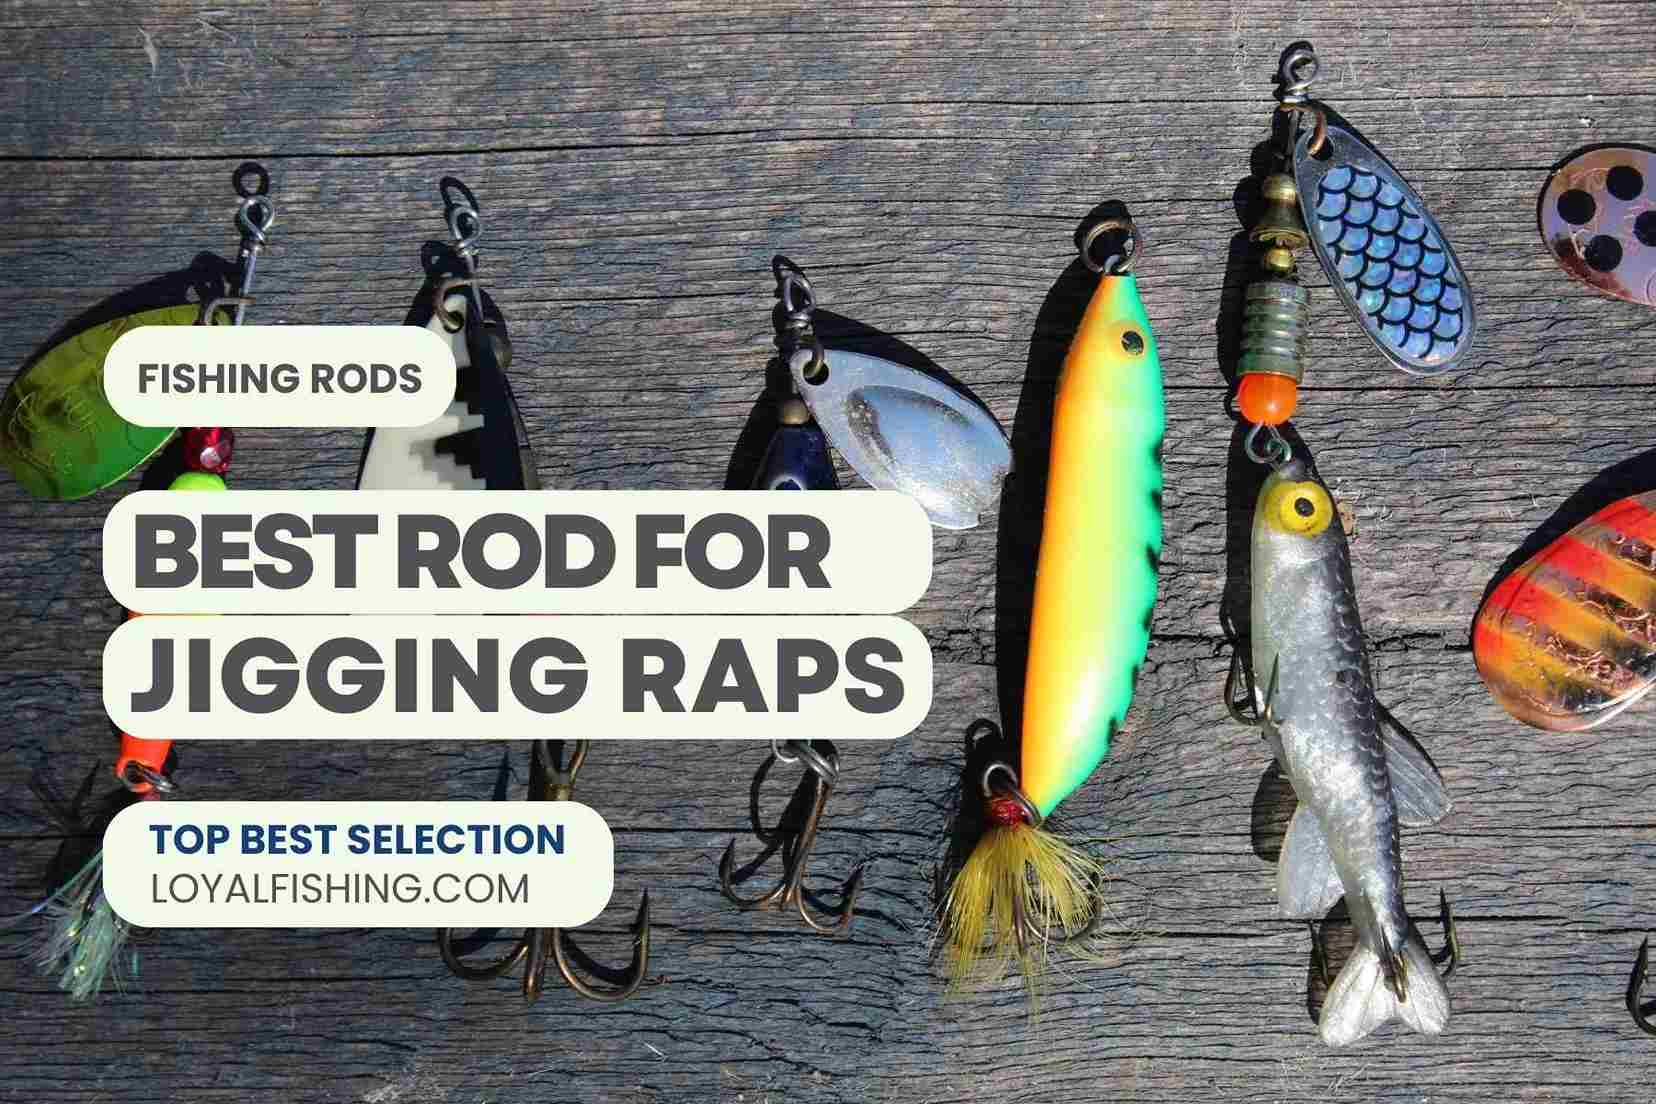 Best Rod for Jigging Raps